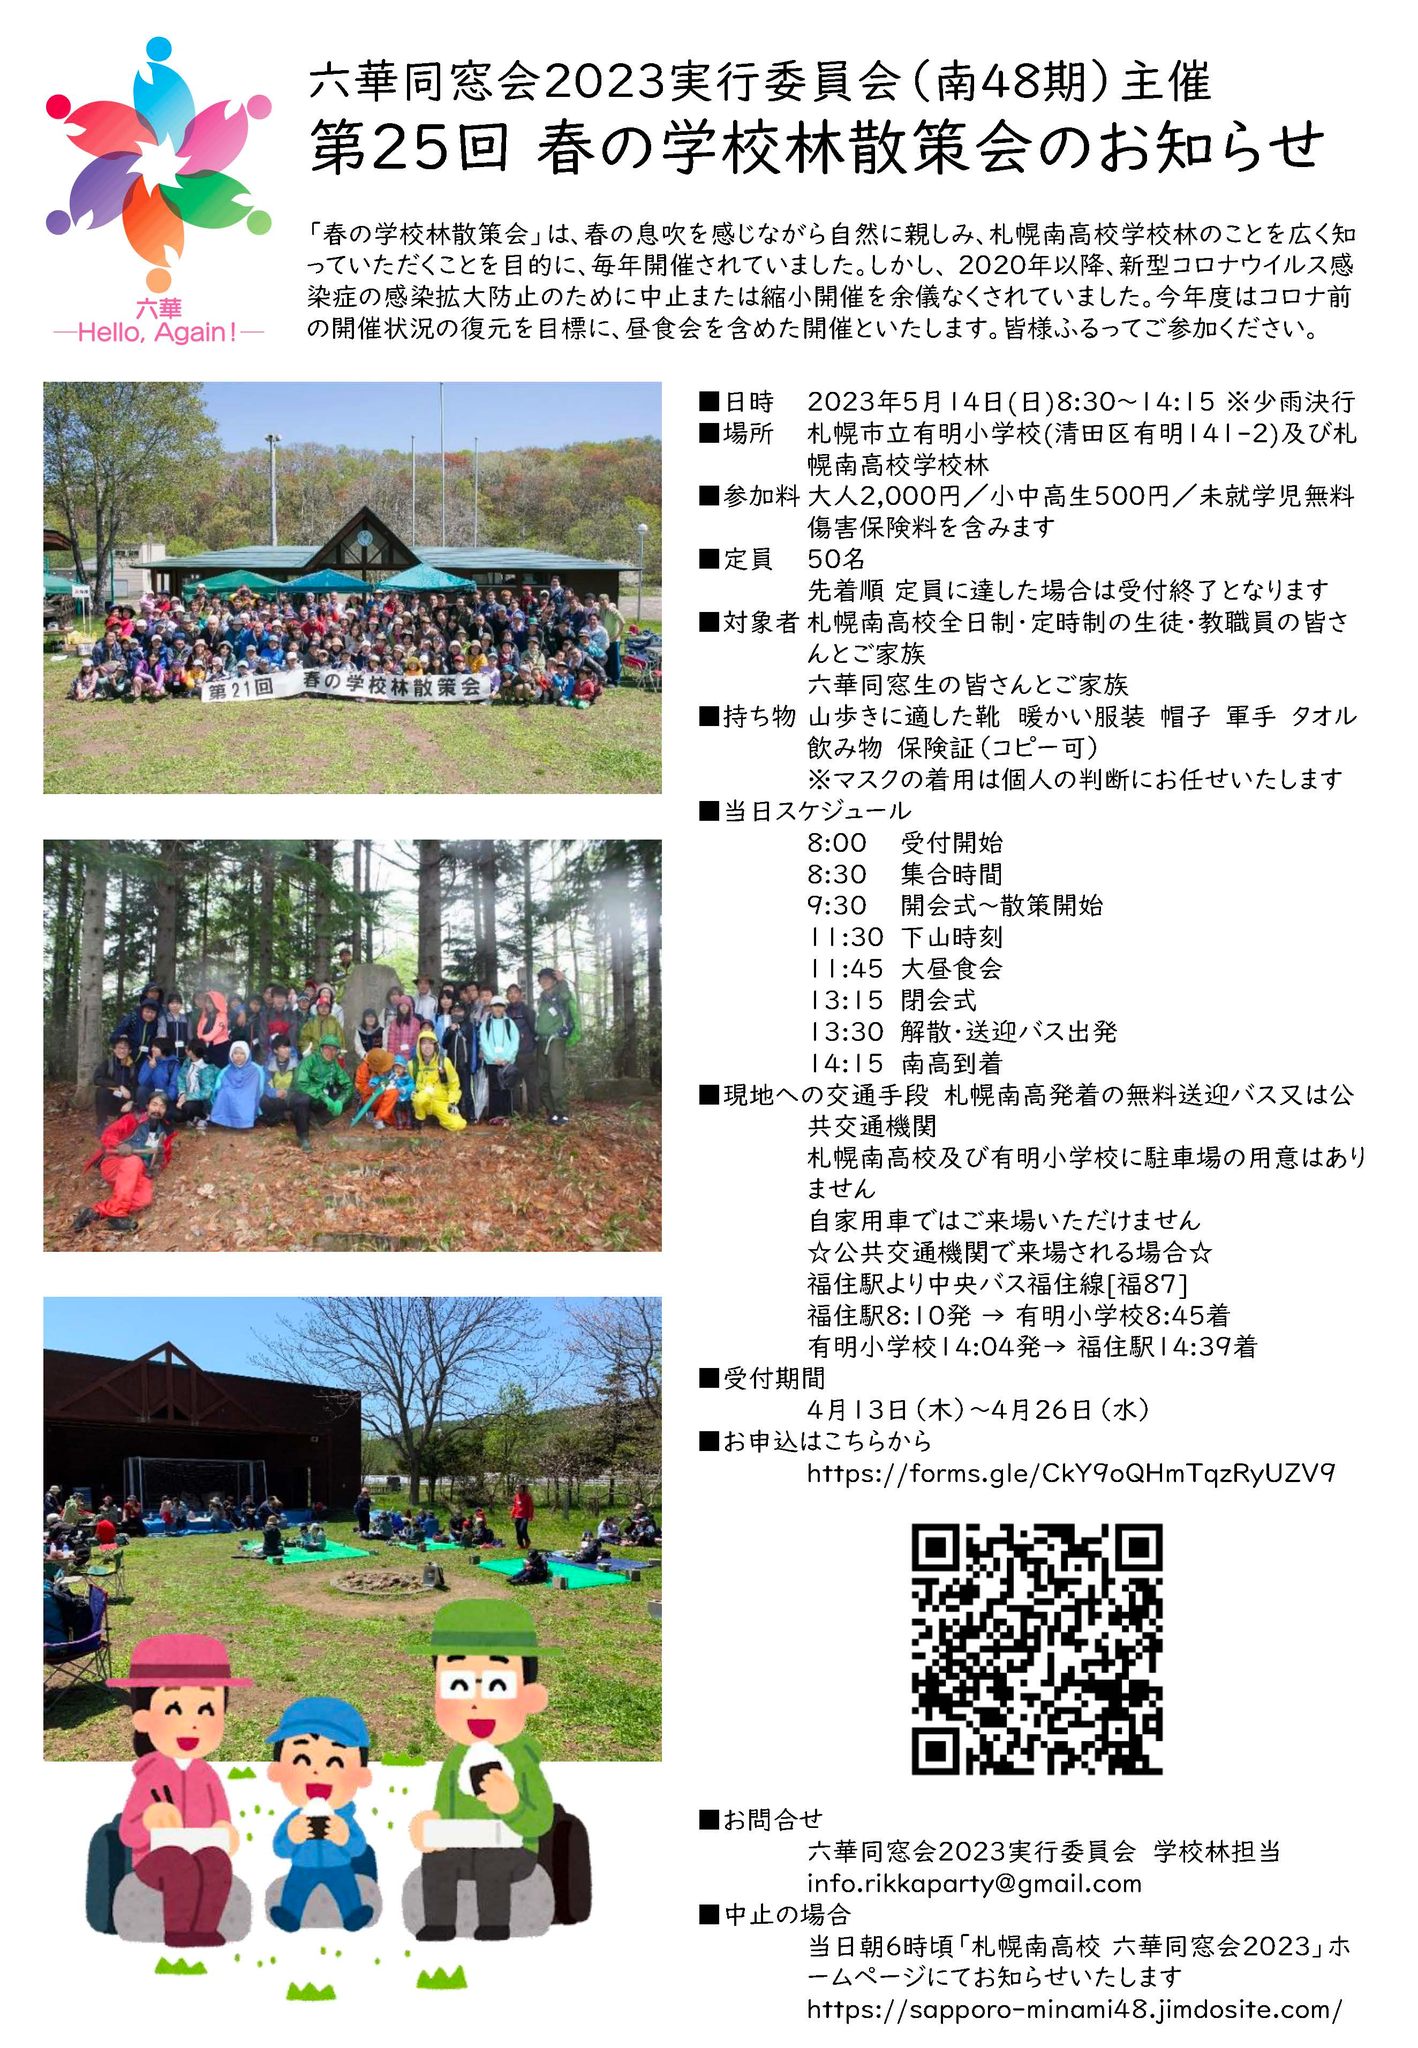 http://www.rikka-forest.jp/info/images/rikka_forest_23sp.jpeg